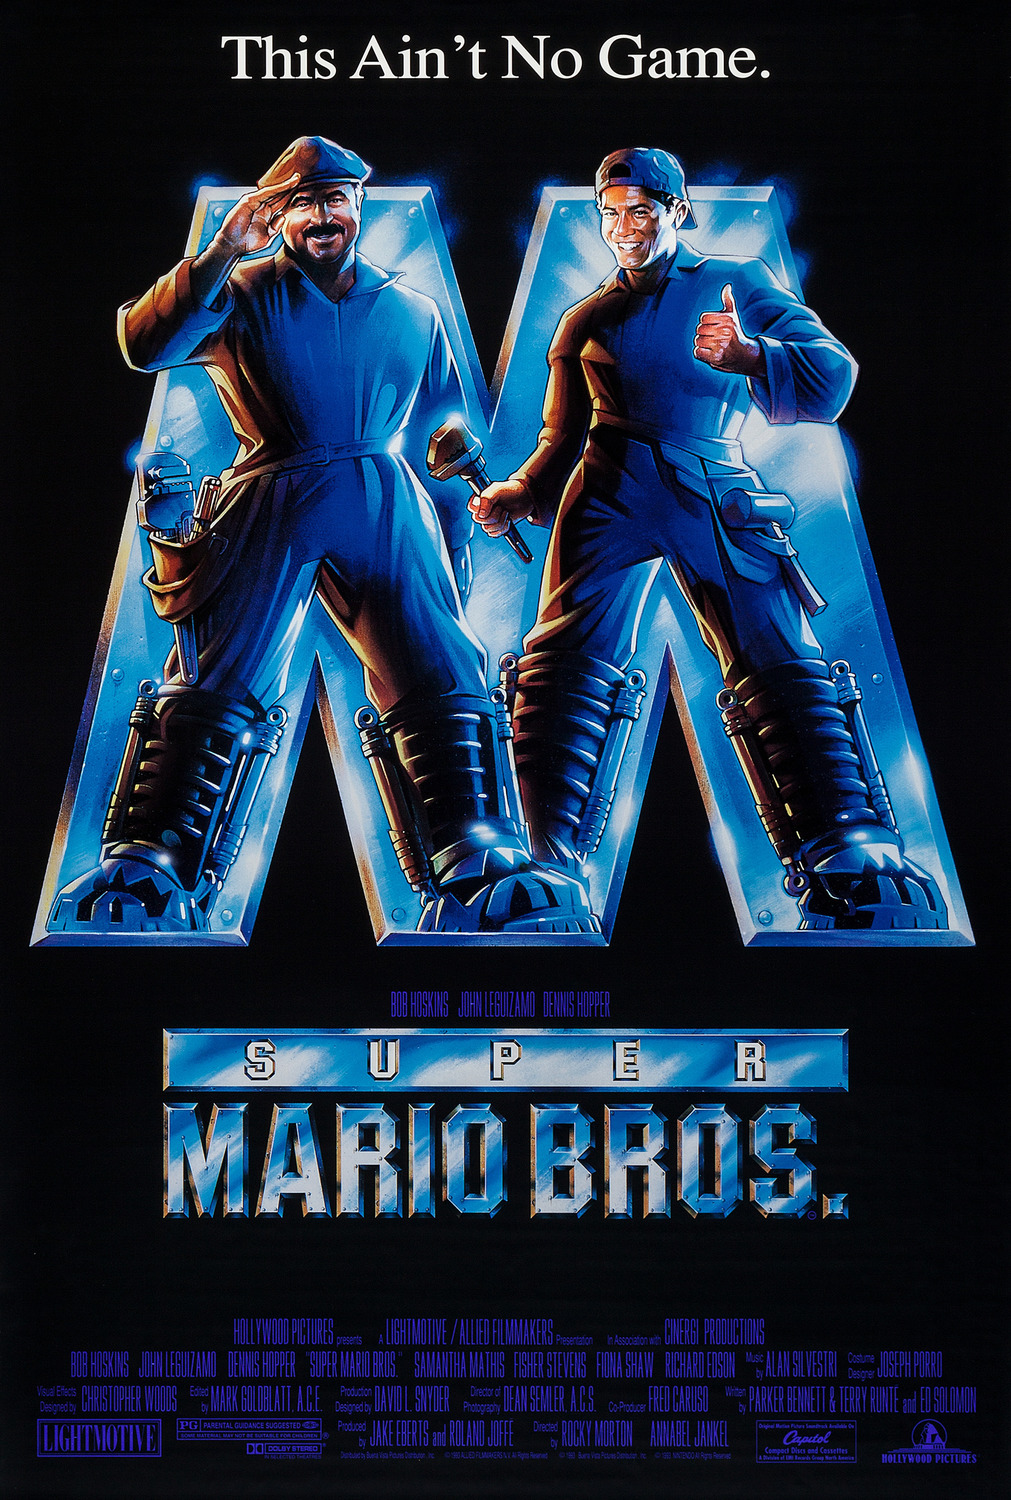 Super Mario Bros. movie poster from 1993